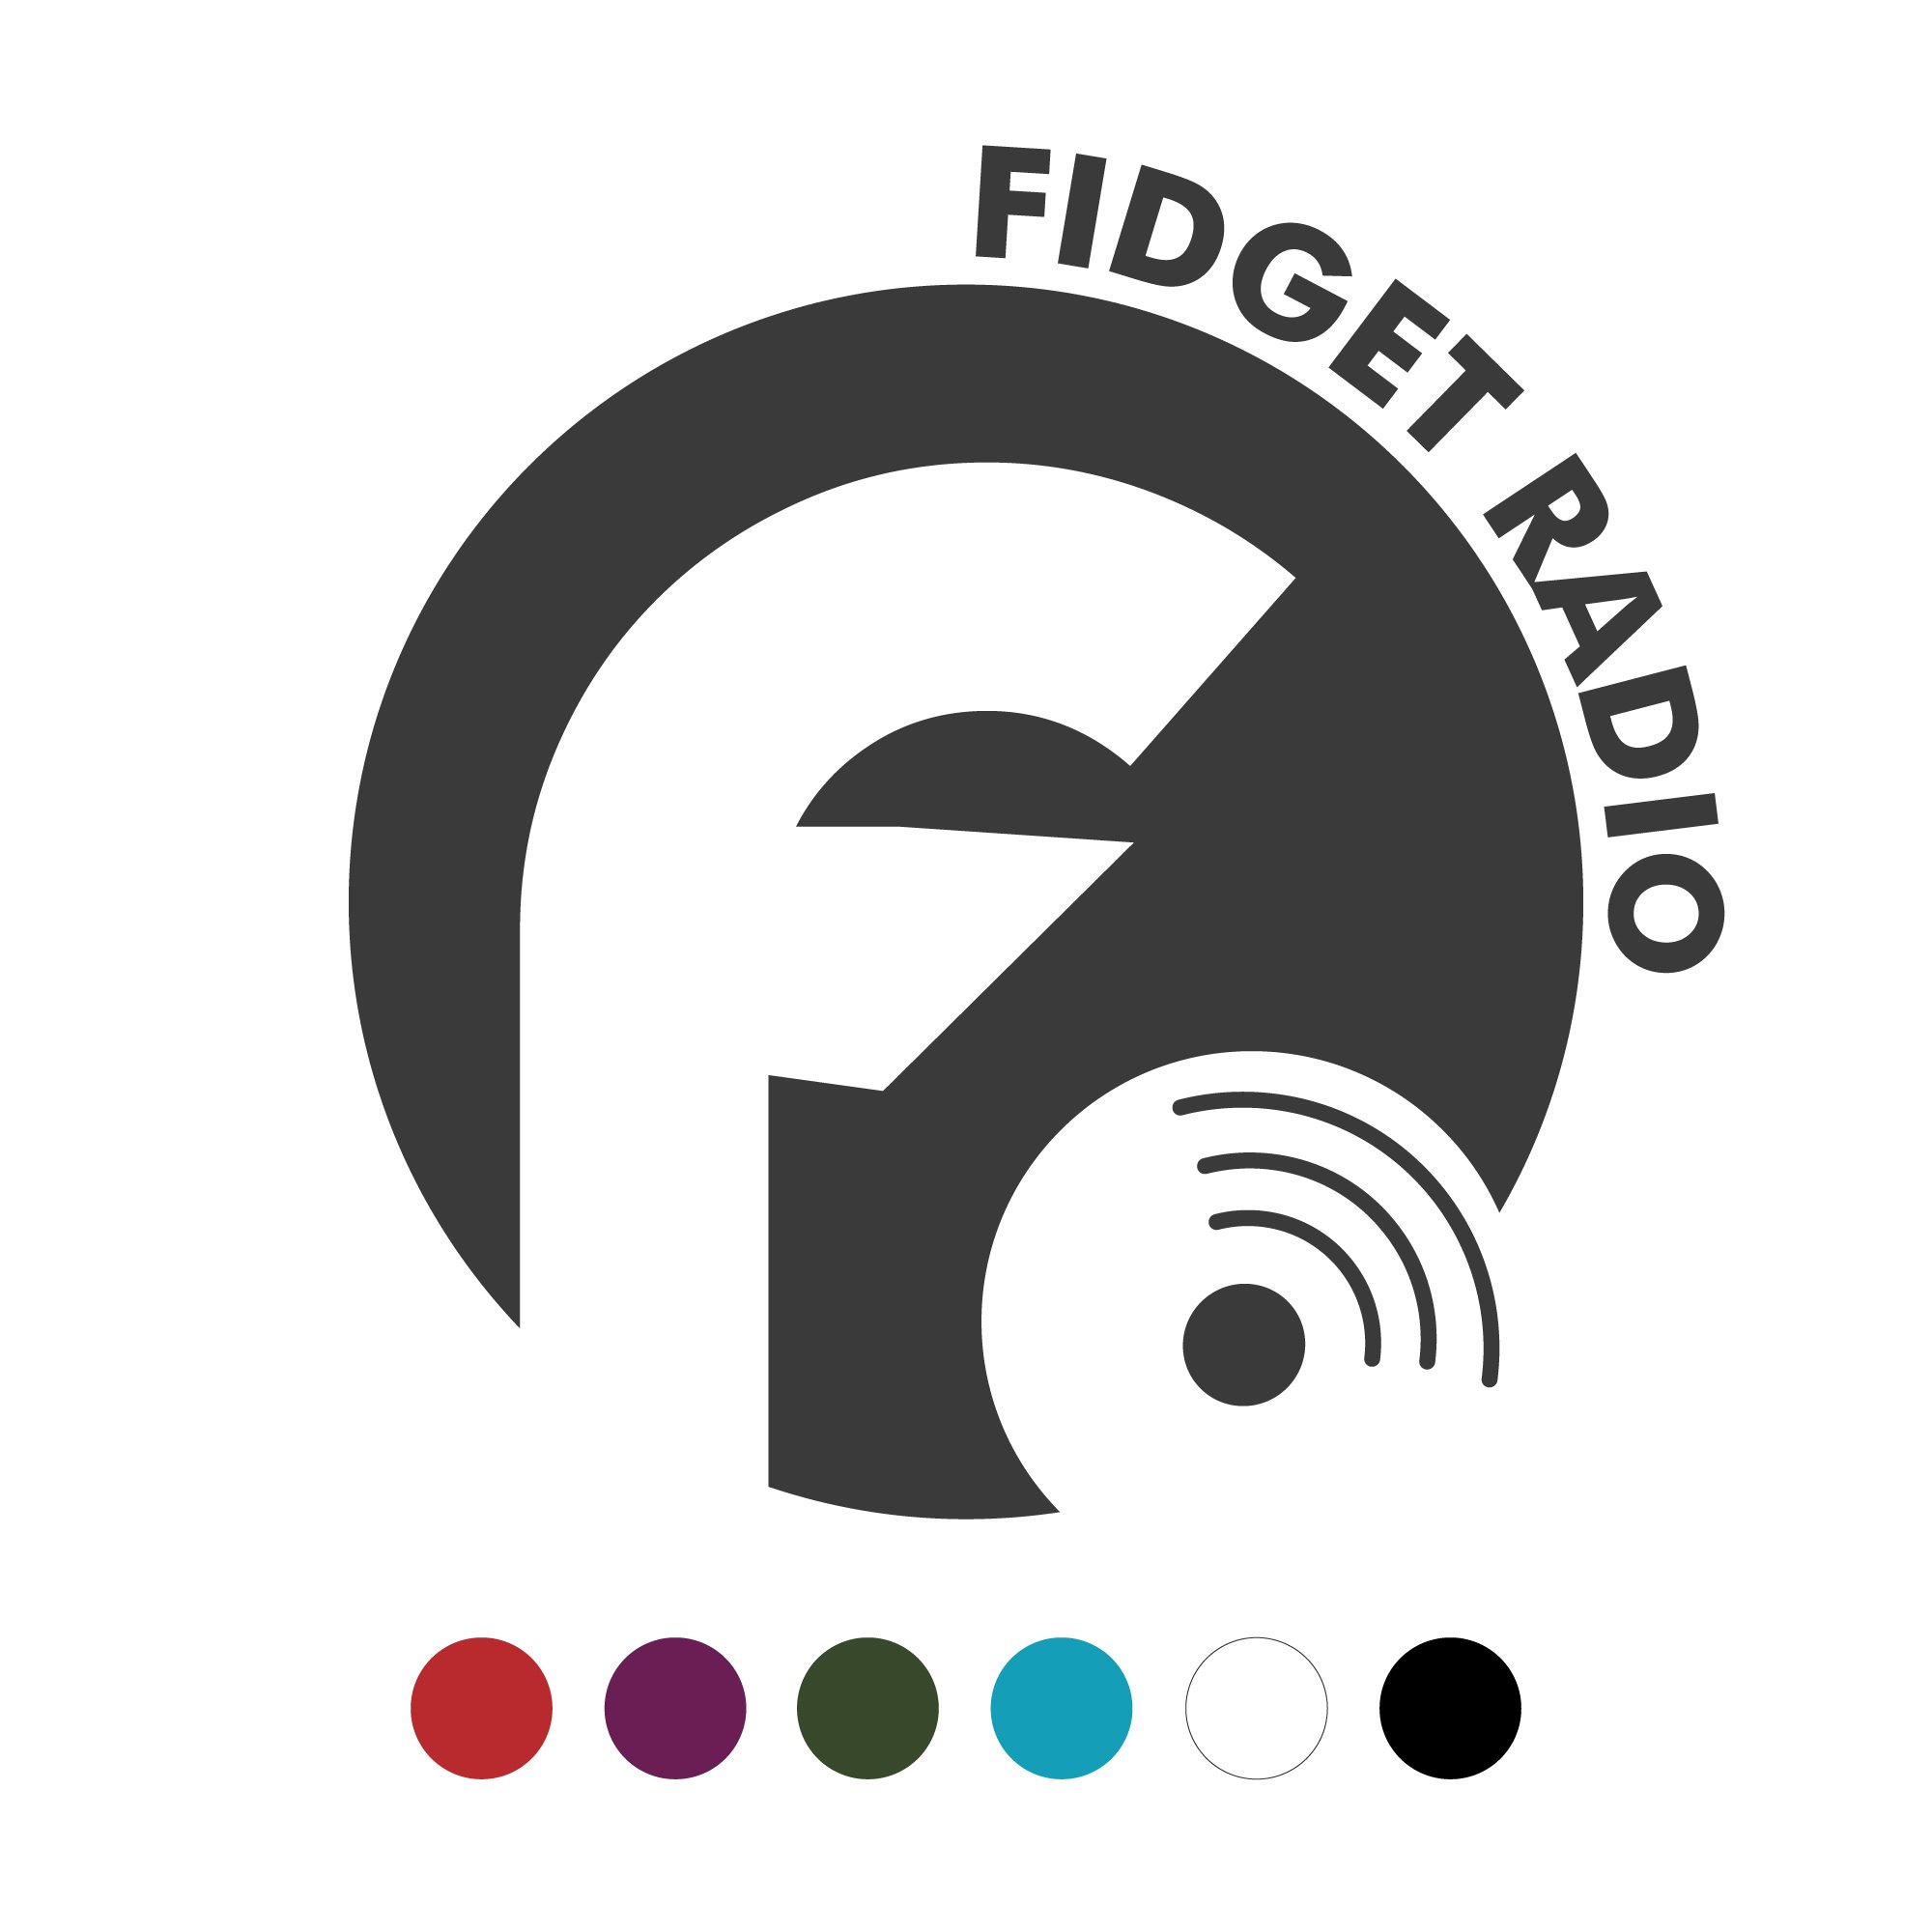 Fidget Radio - An upcoming monthly dance music radio/video show. Patreon - https://t.co/oilkpnC7Wz